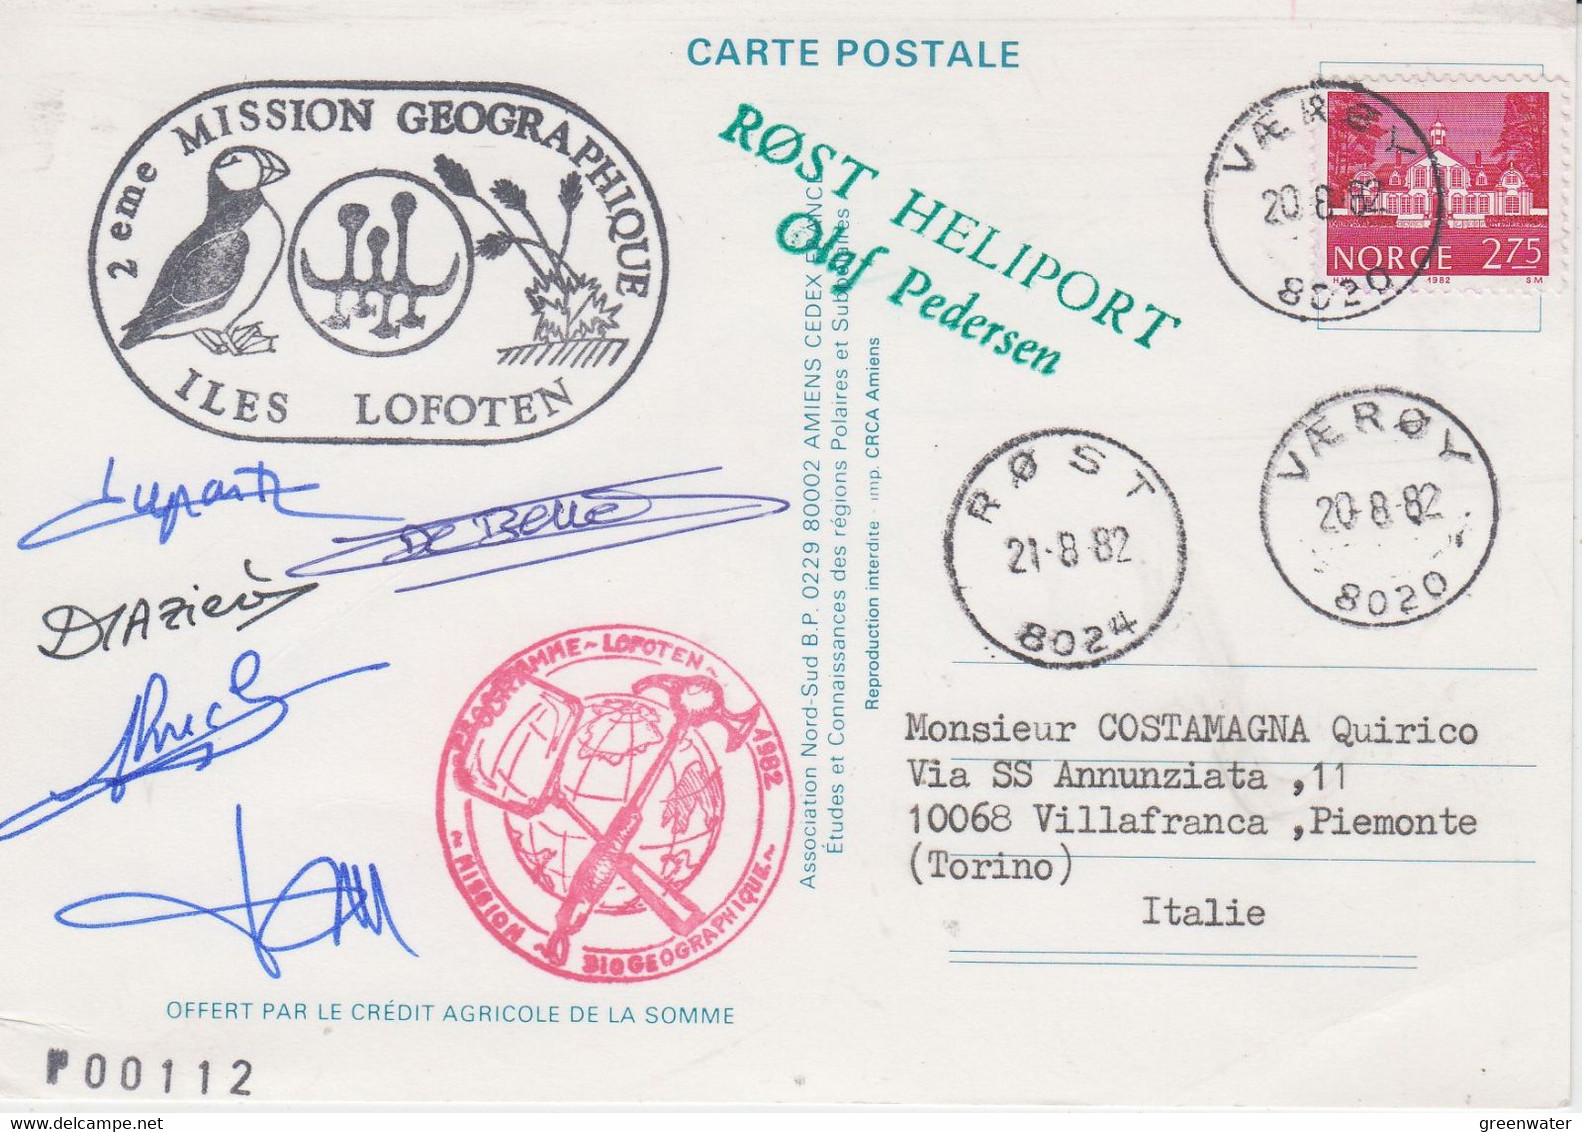 Norway 1982 Postcard Emile Victor  2eme Mission Georgraphique Ca Rost Heliport  5 Signatuires Ca Varoy 20-8-1982 (NW200) - Programmes Scientifiques